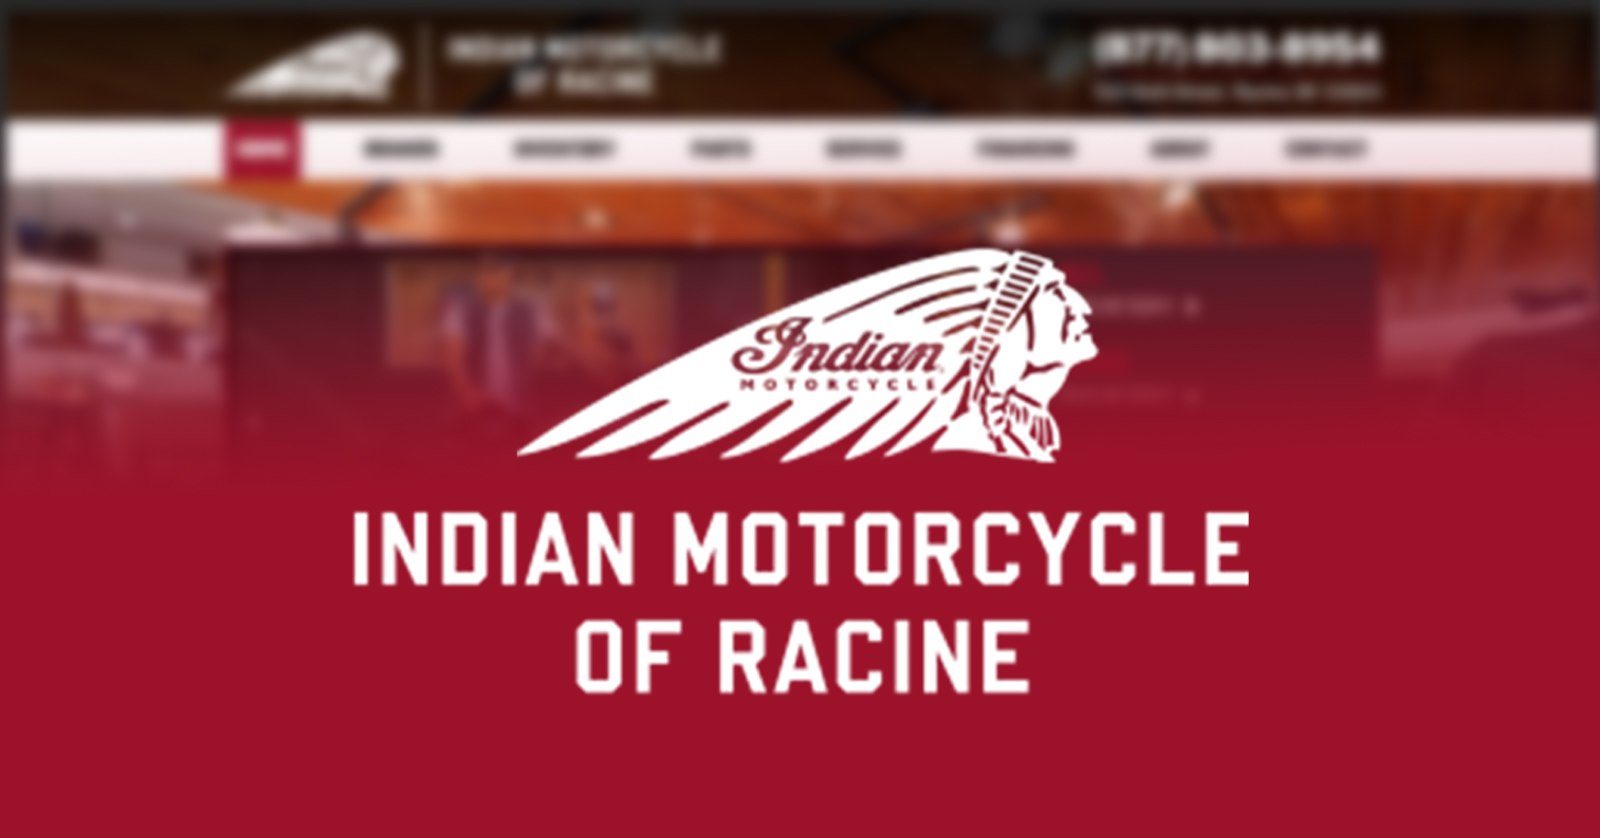 Indian Motorcycle of Racine | Midwest Indian Trike Headquarters